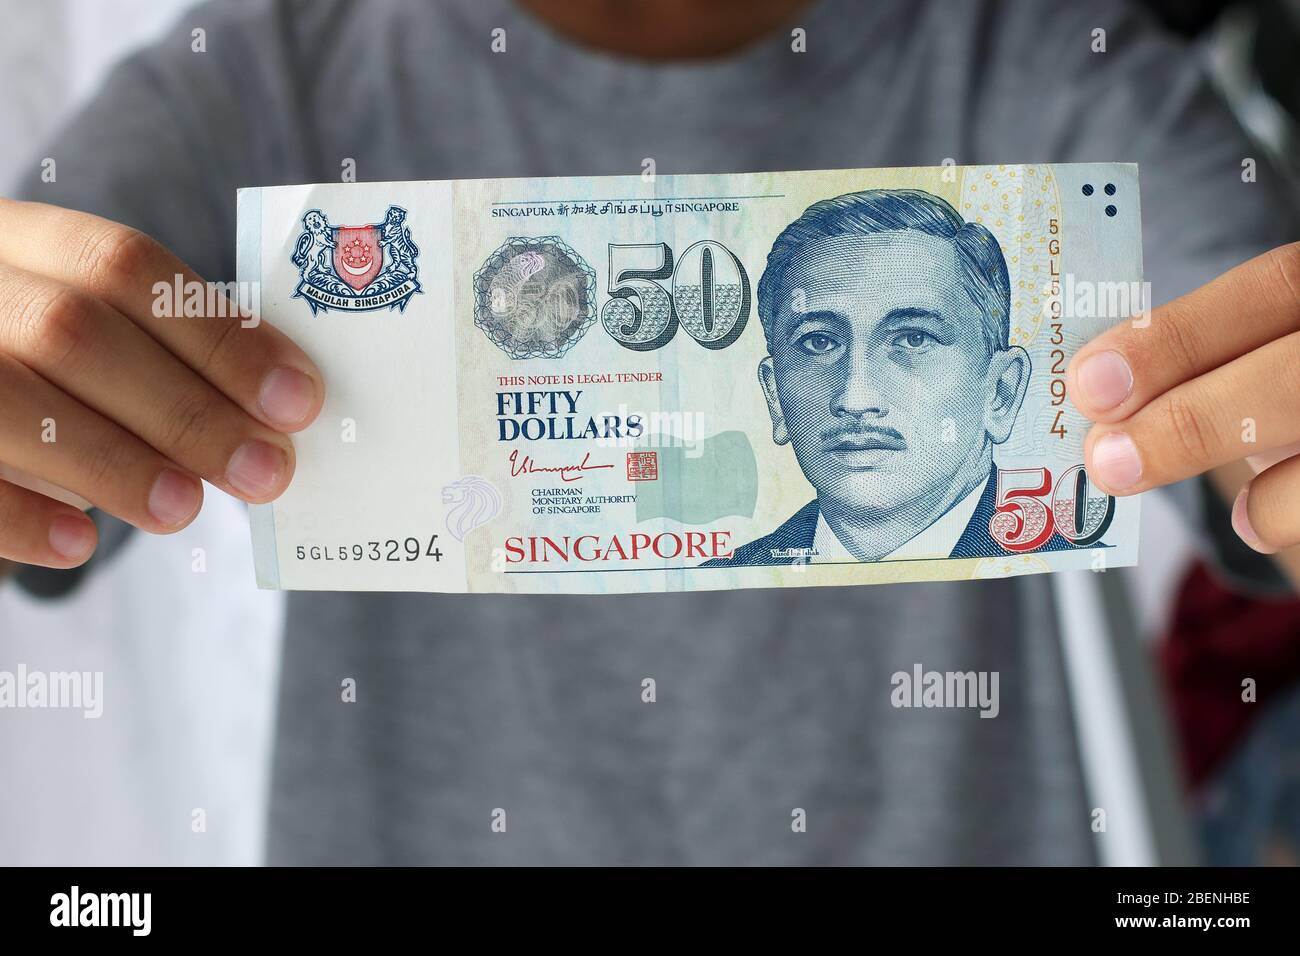 STOCK PHOTO: Fifty Singaporean dollars, $50 Singaporean currency note Stock Photo